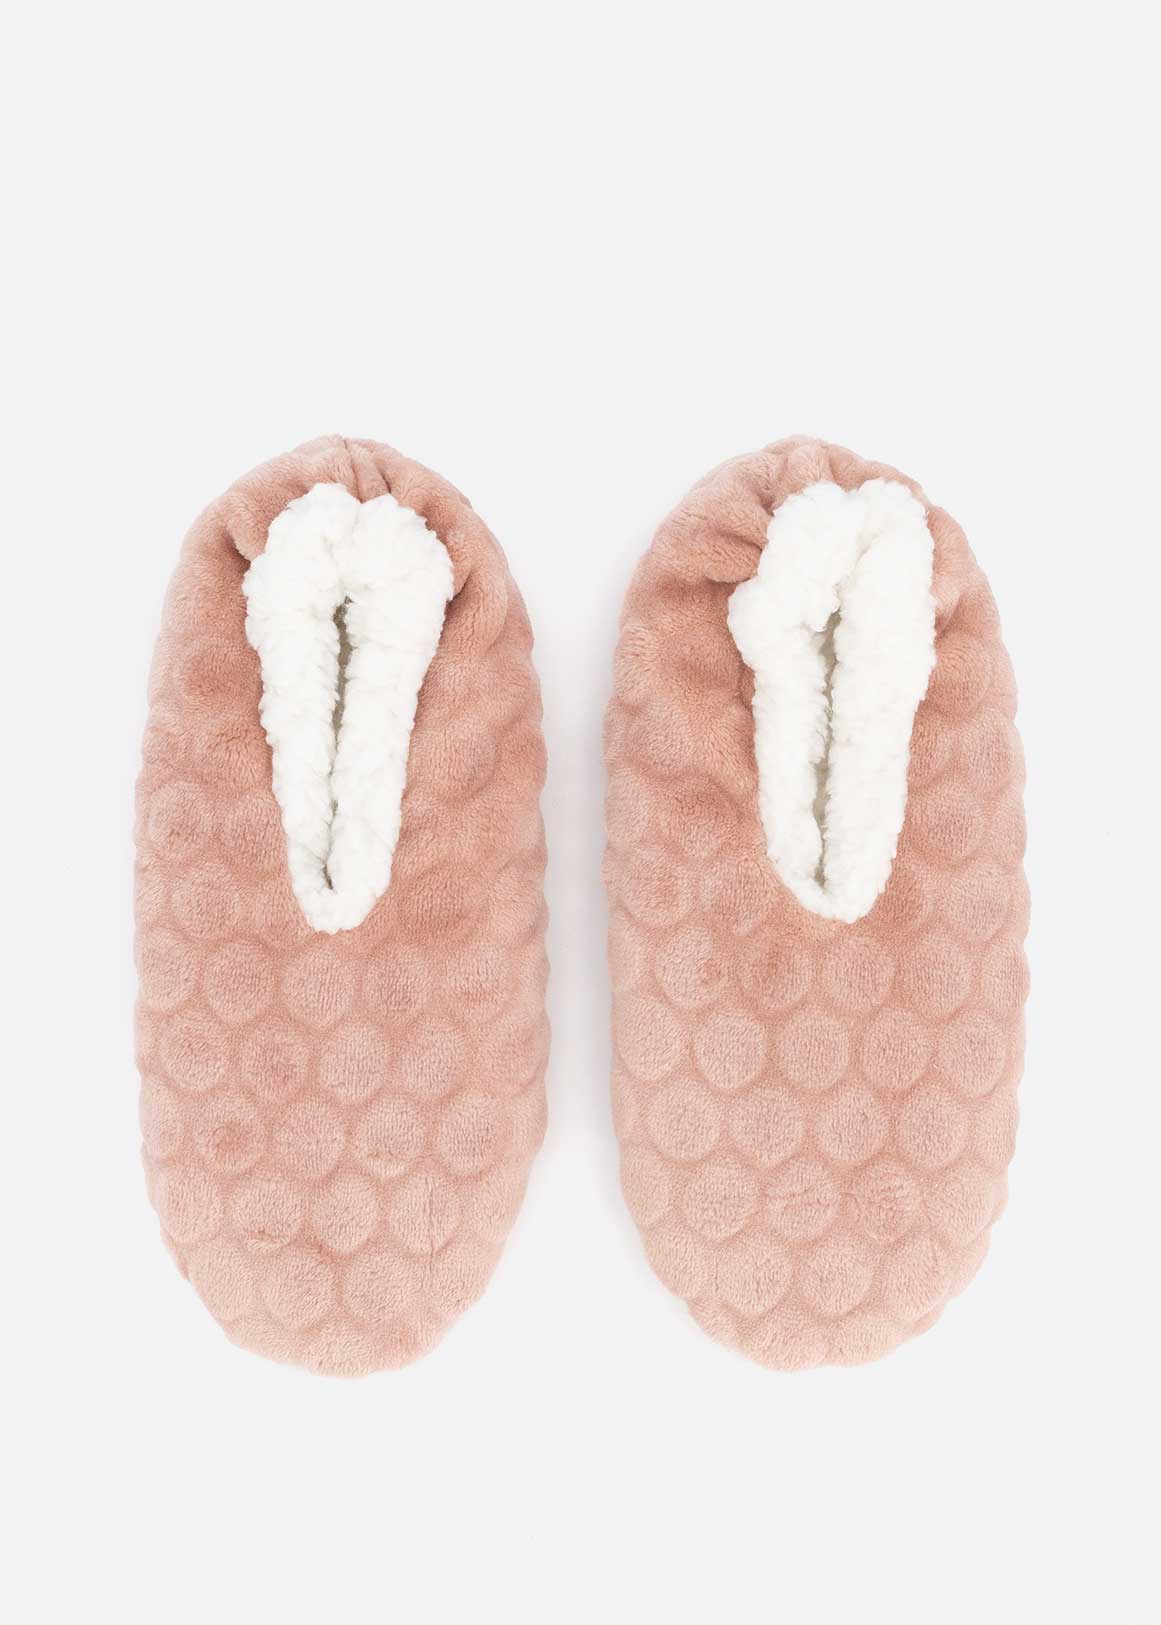 Zoomarlous Fuzzy Socks Solid Color Warm Plush Soft Padded Slipper Sock  Sleep Stocking For Men Boys New - Walmart.com